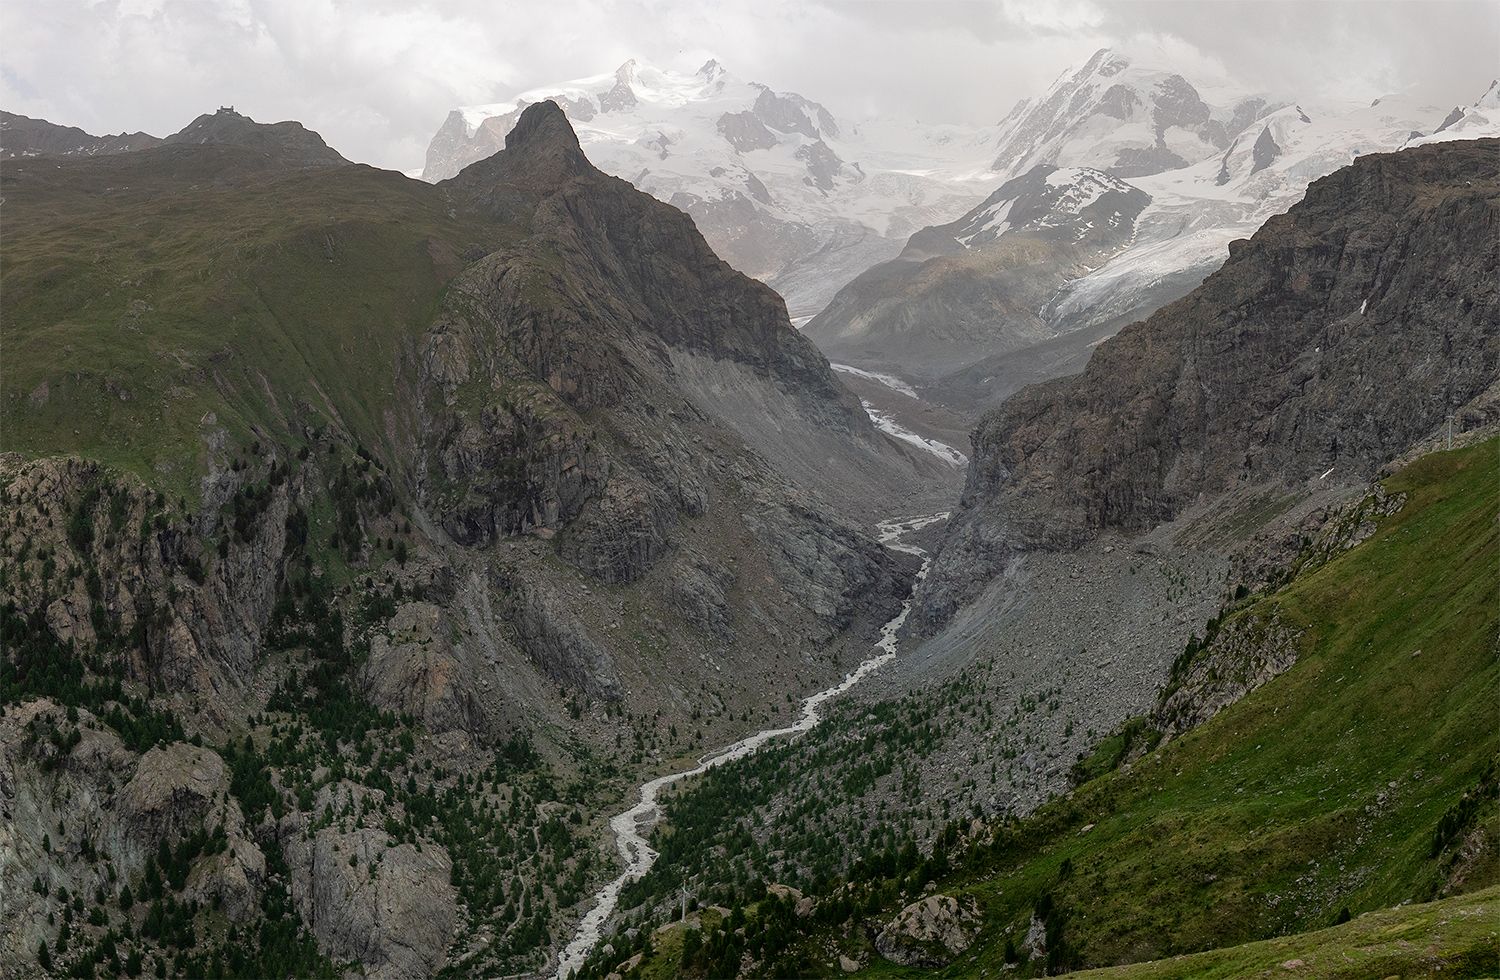 I walked the Alps' largest glacier. It felt like 'last-chance